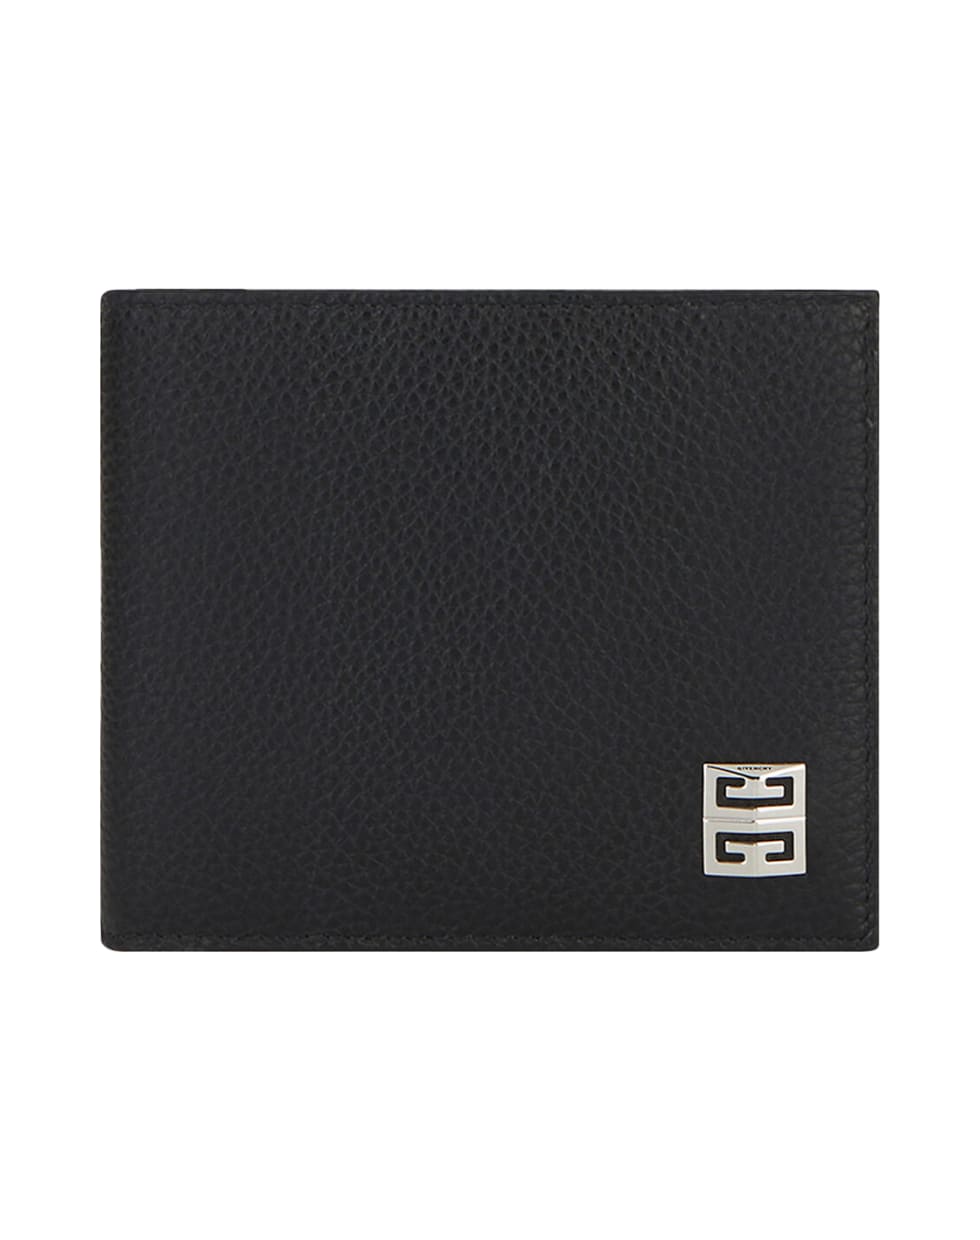 Givenchy 4cc Billfold Coin Wallet - Black